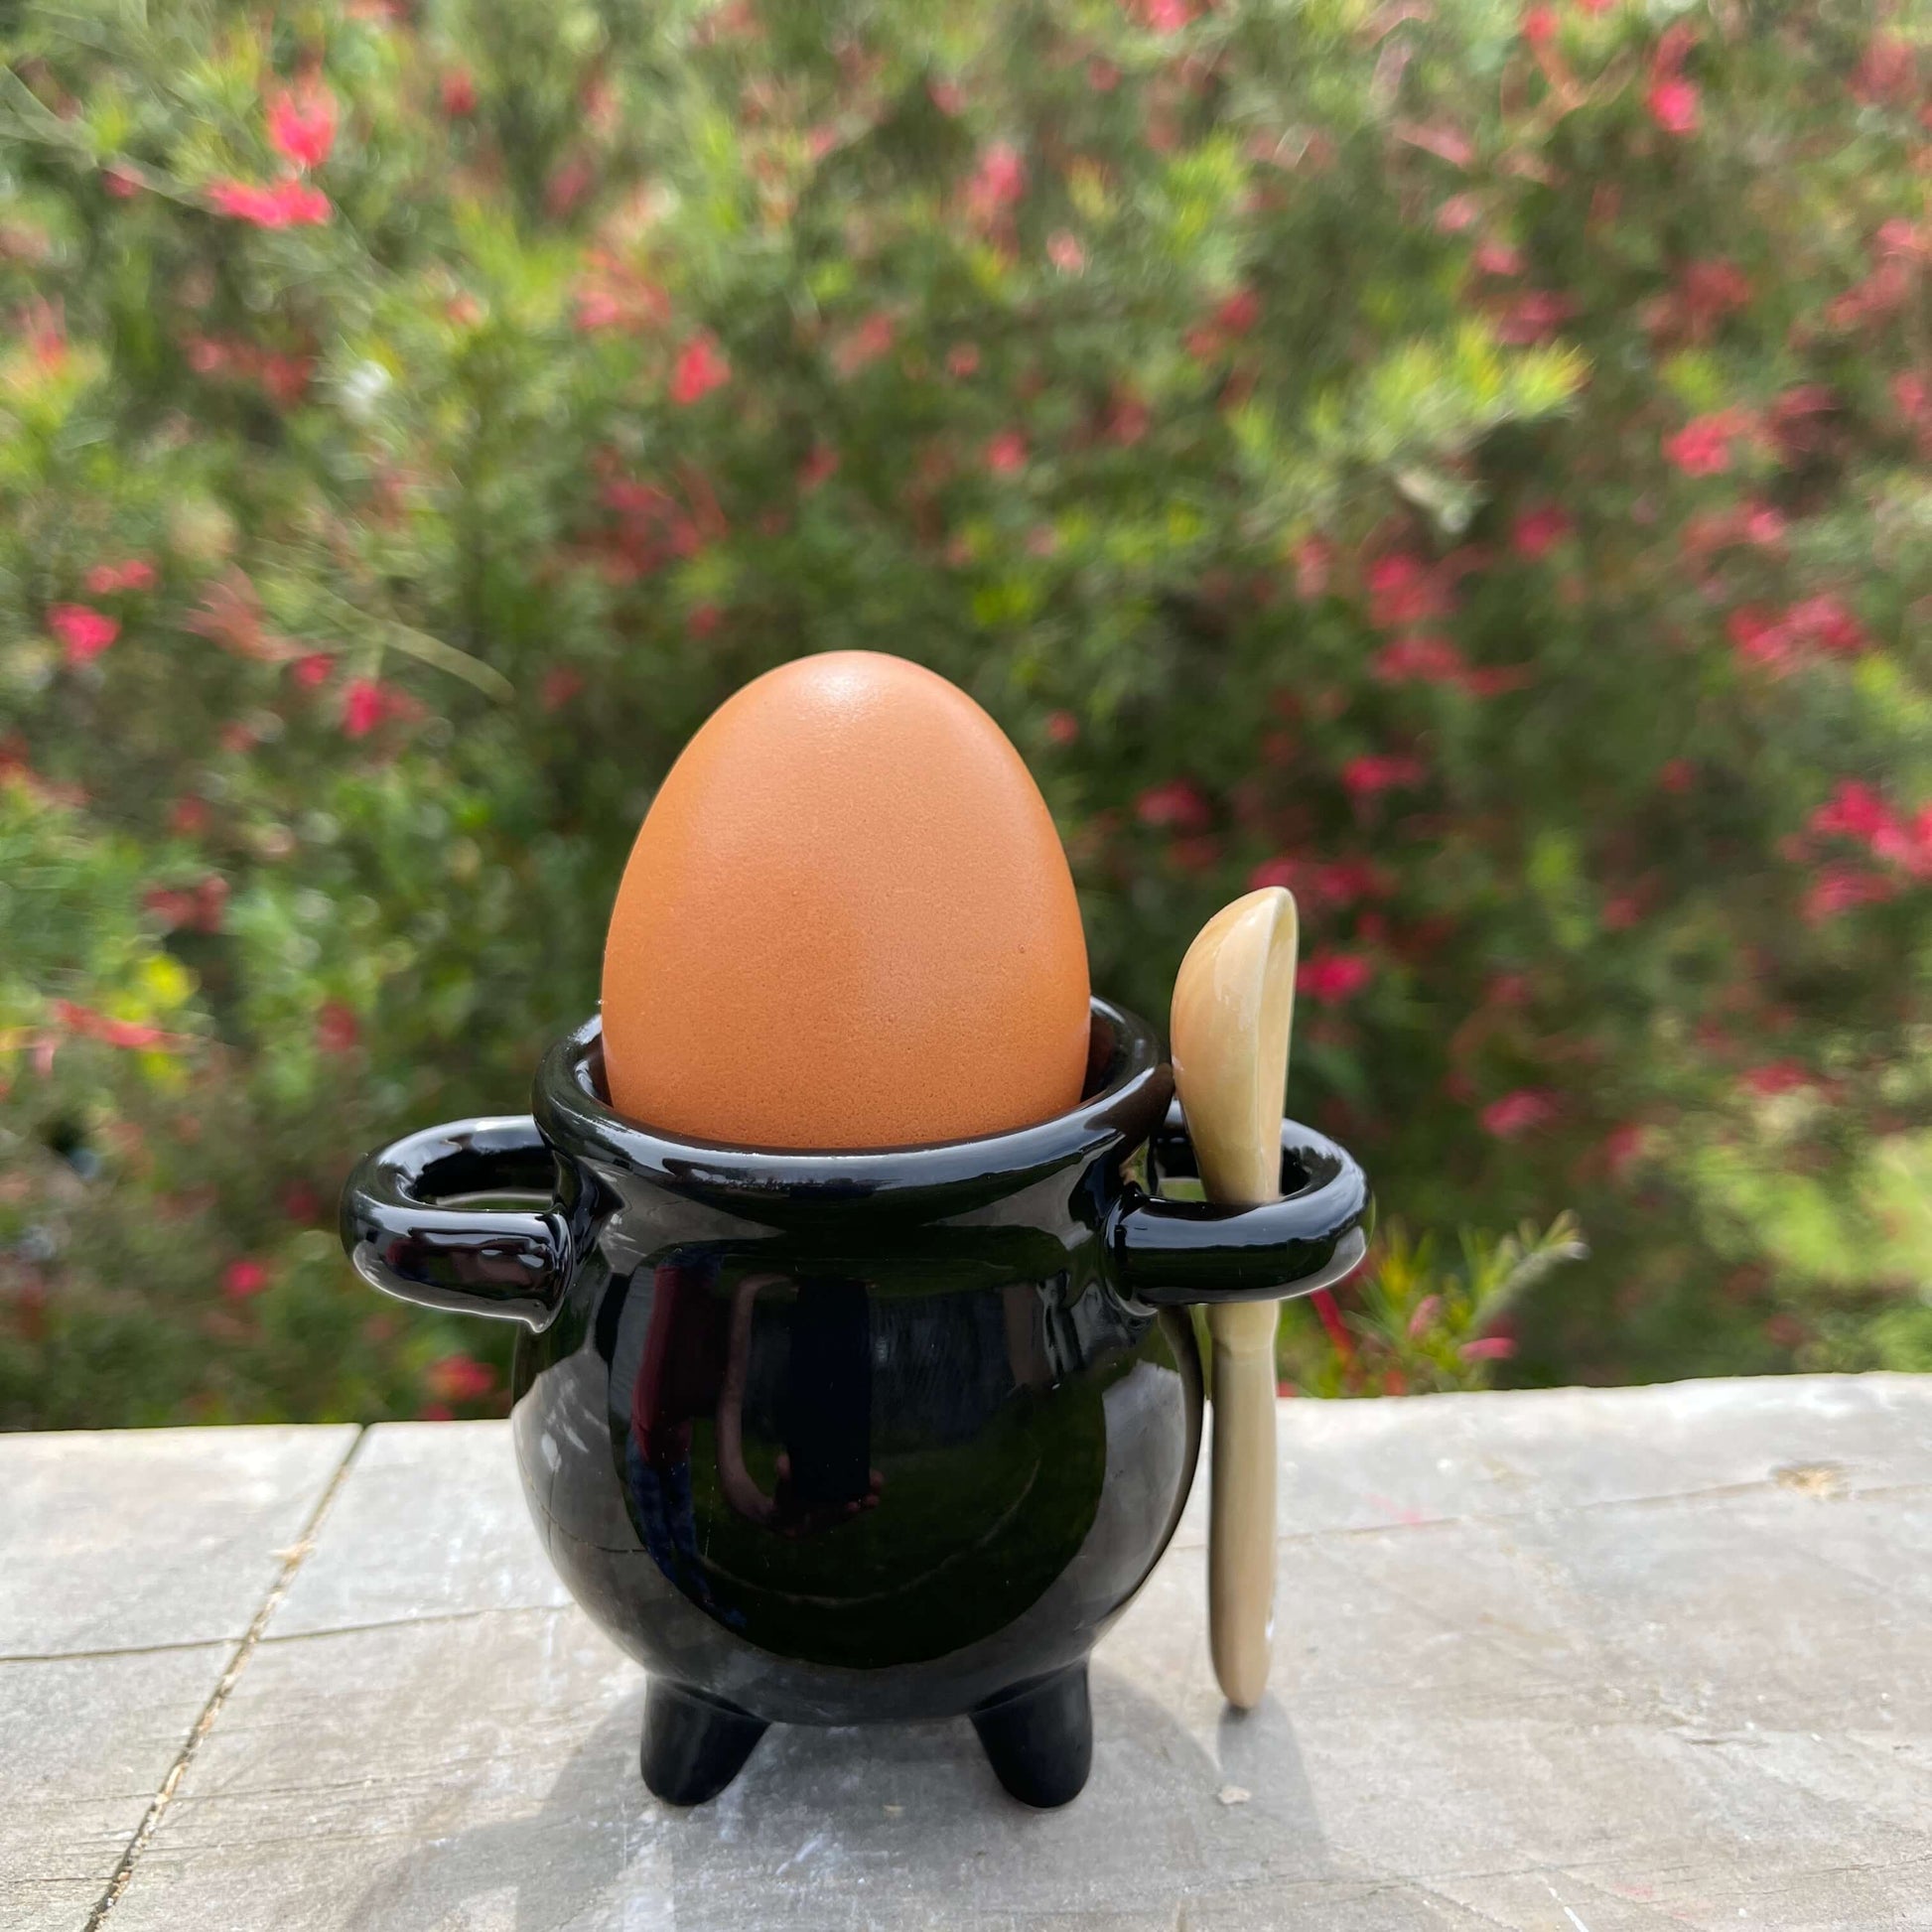 Black ceramic cauldron shaped egg cup with ceramic broom spoon.